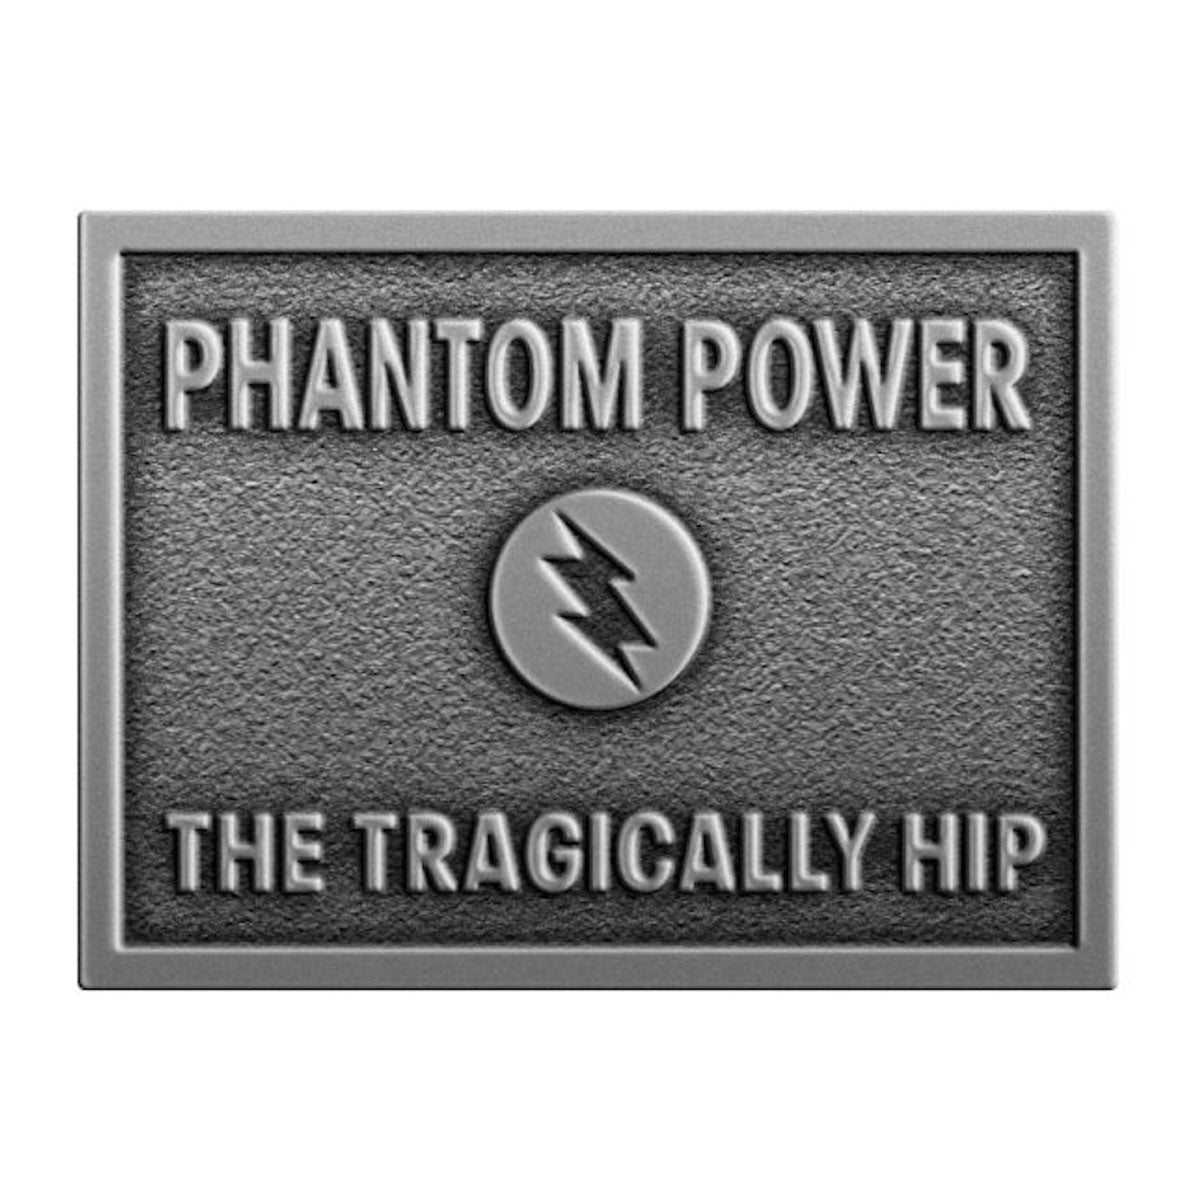 THE TRAGICALLY HIP Phantom Power 25th Anniversary Belt Buckle Pewter